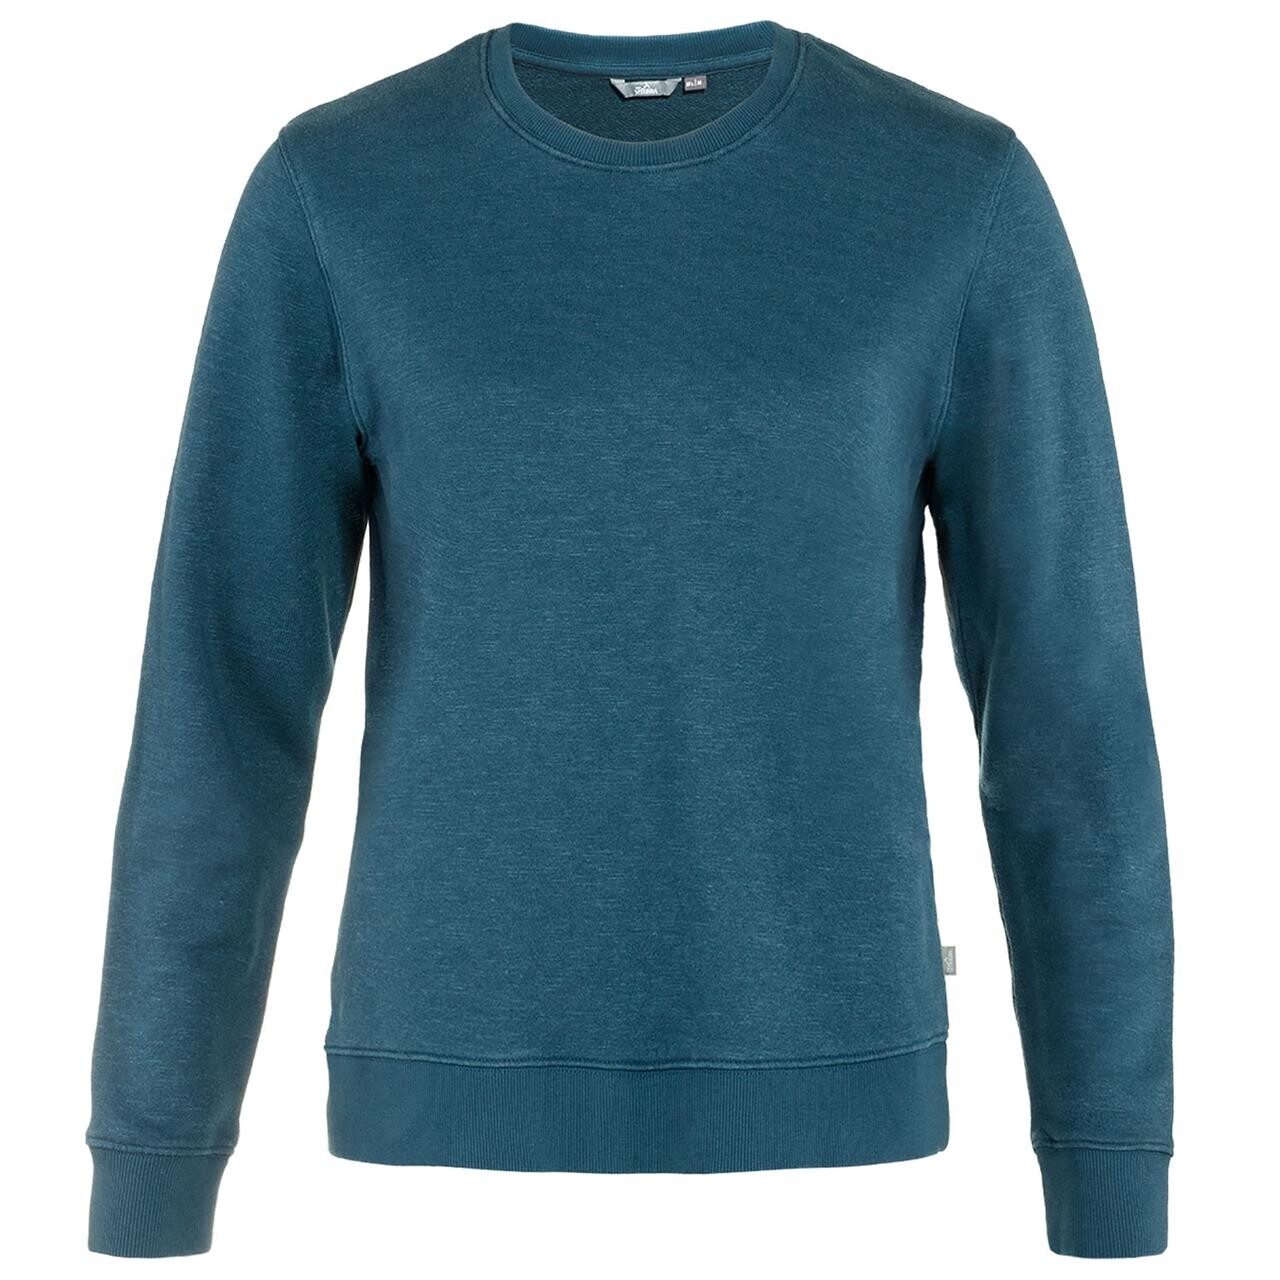 Se Tierra Womens Hempy Sweater (Blå (MAJOLICA BLUE) Large) hos Friluftsland.dk